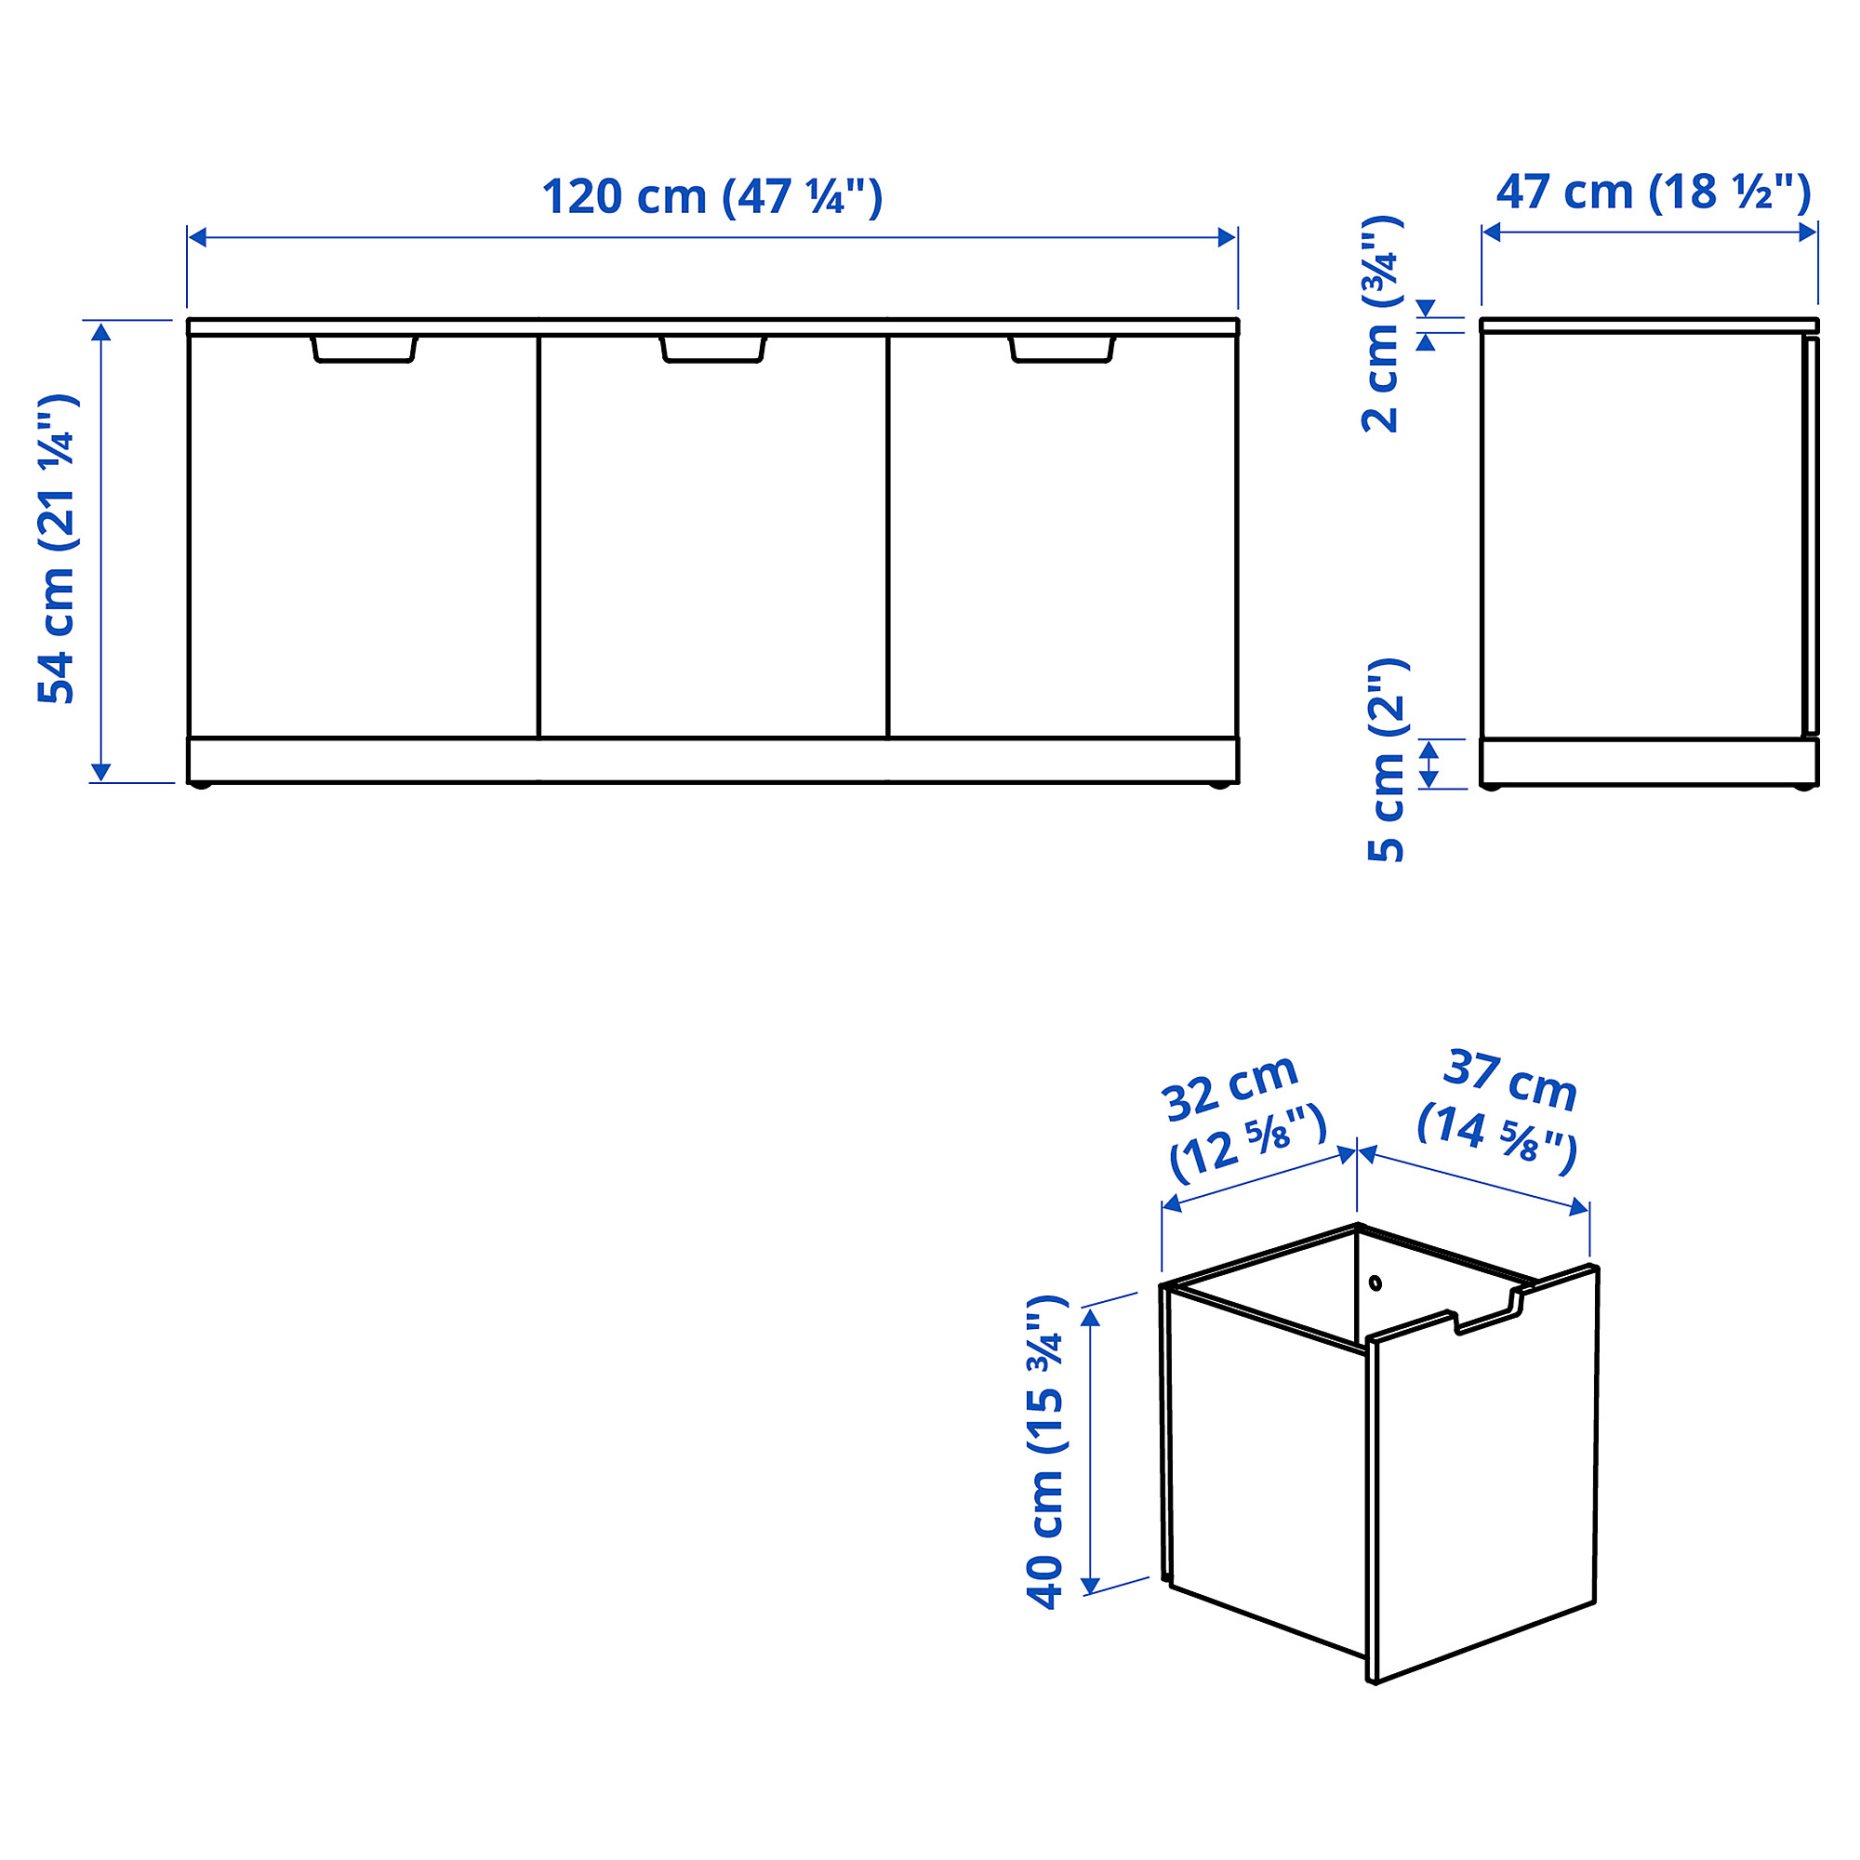 NORDLI, chest of 3 drawers, 120x54 cm, 692.765.67